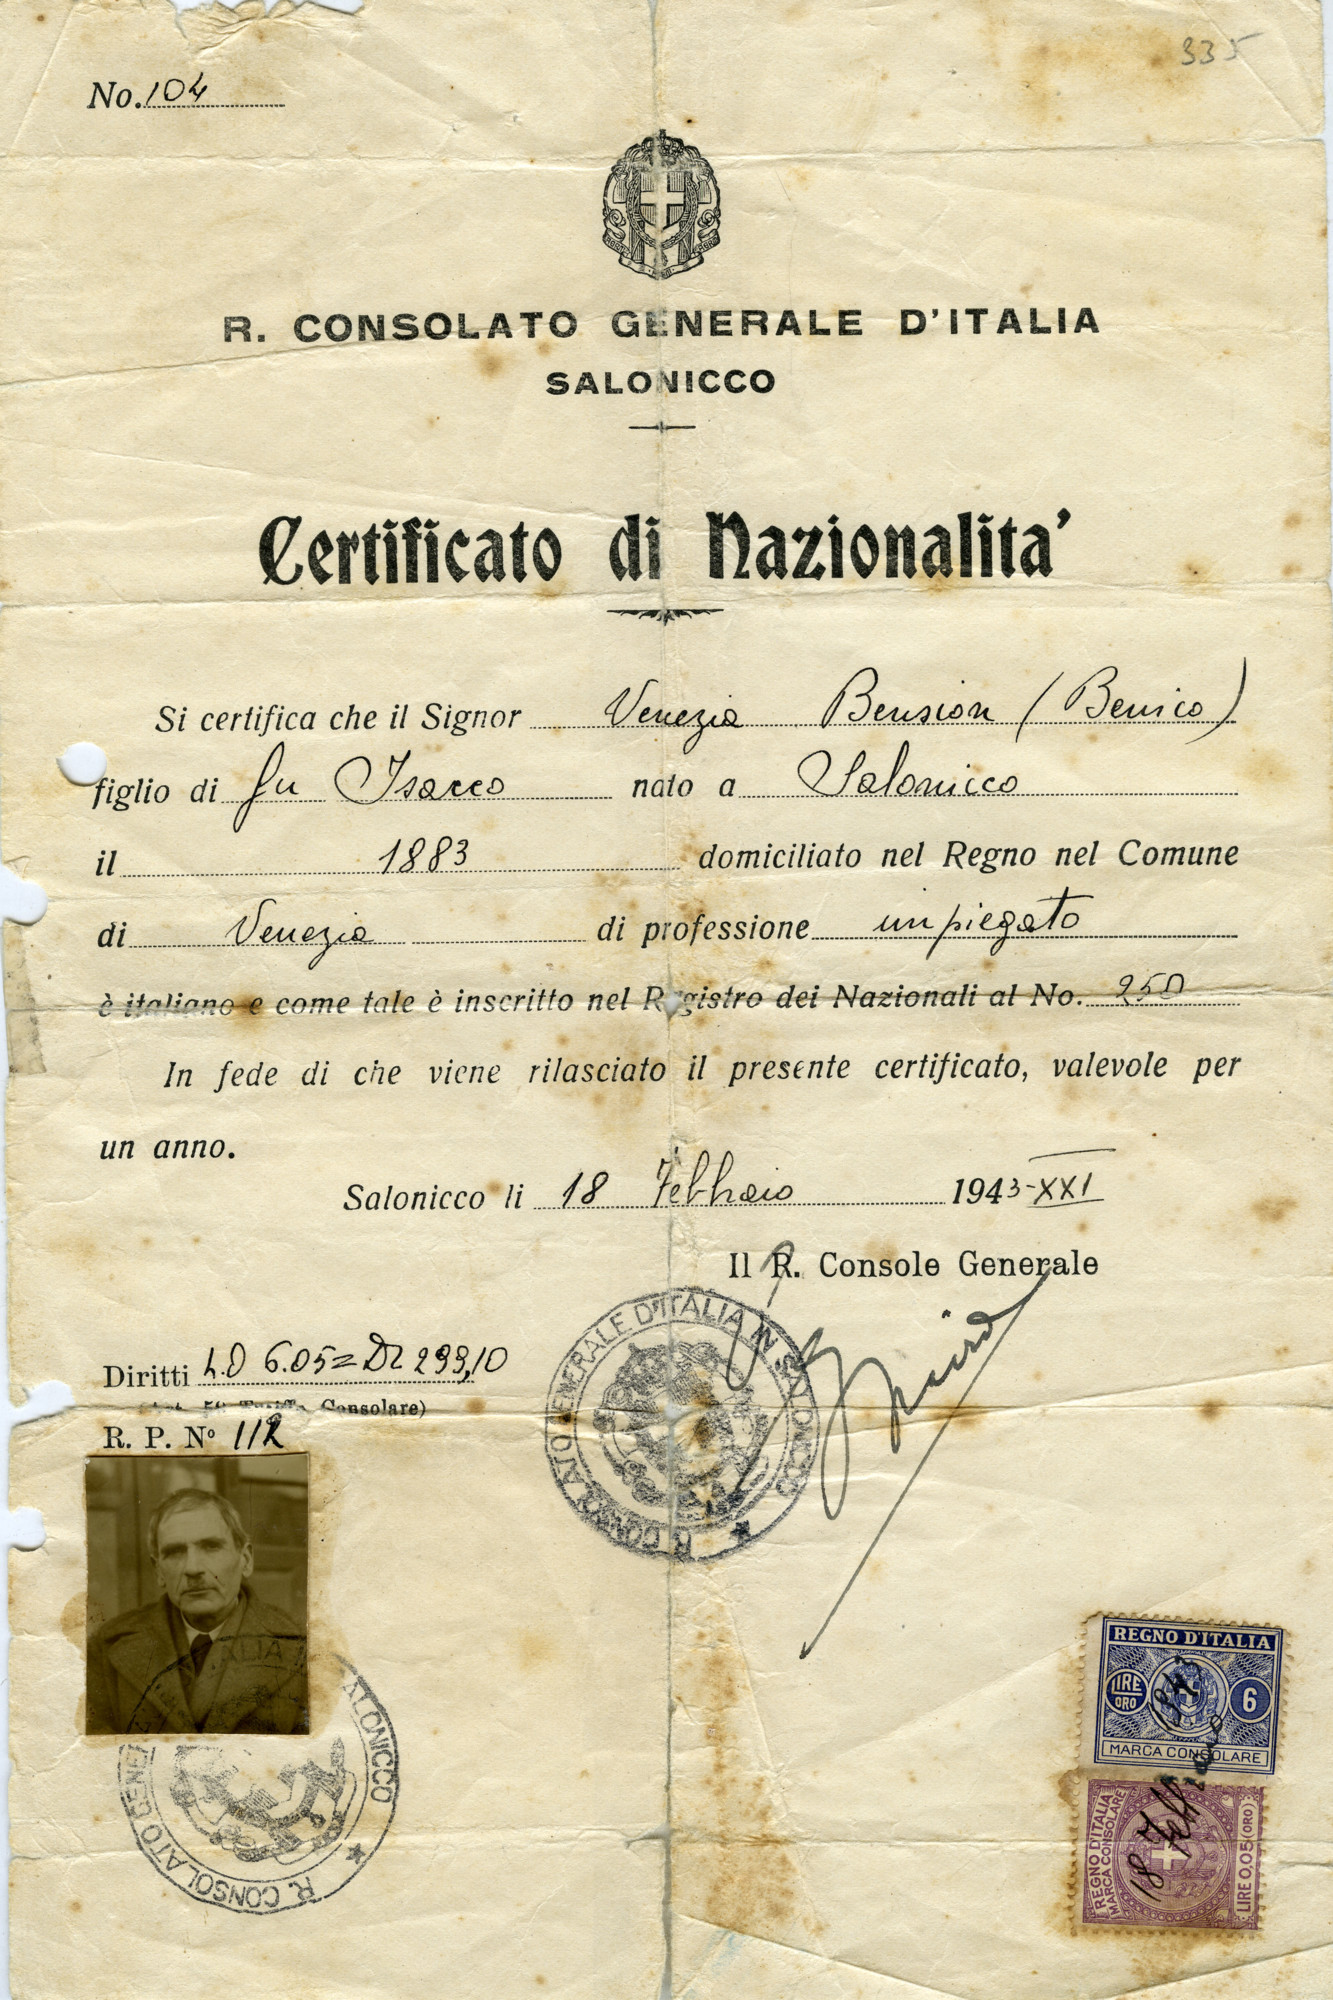 Certificate of Italian nationality for Benzion Venezia.